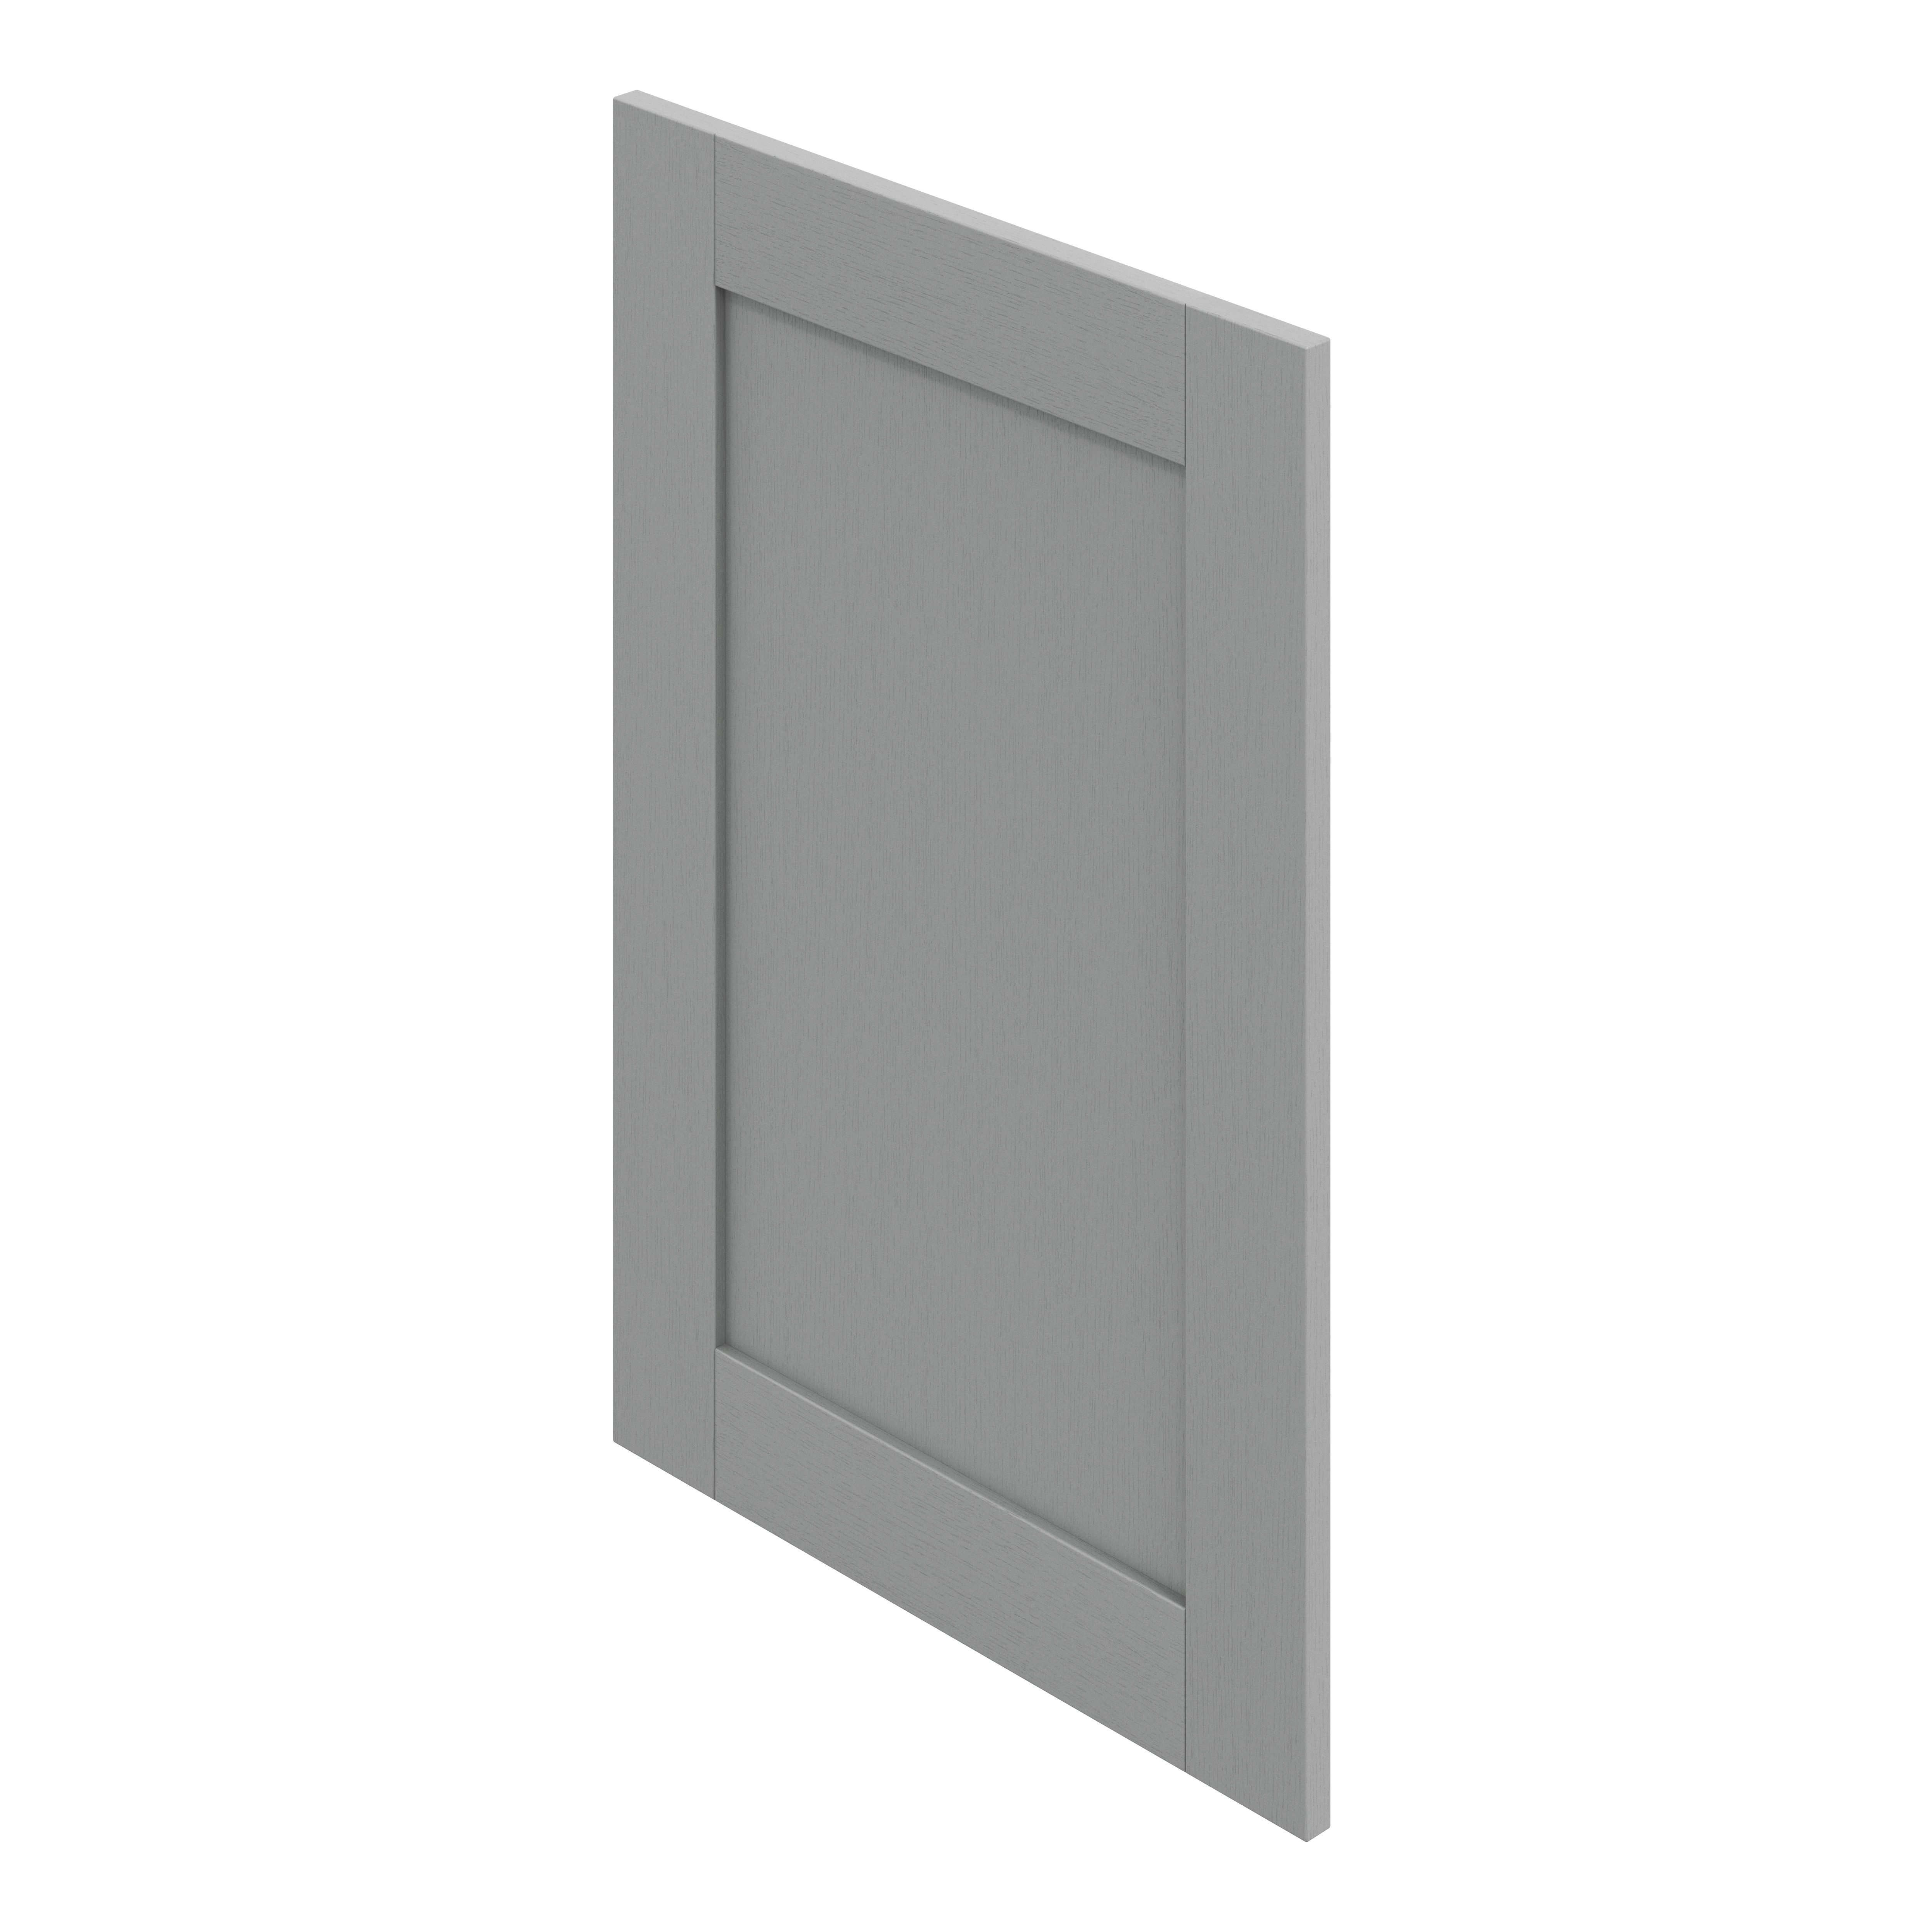 GoodHome Alpinia Matt Slate Grey Painted Wood Effect Shaker Highline Cabinet door (W)500mm (H)715mm (T)18mm